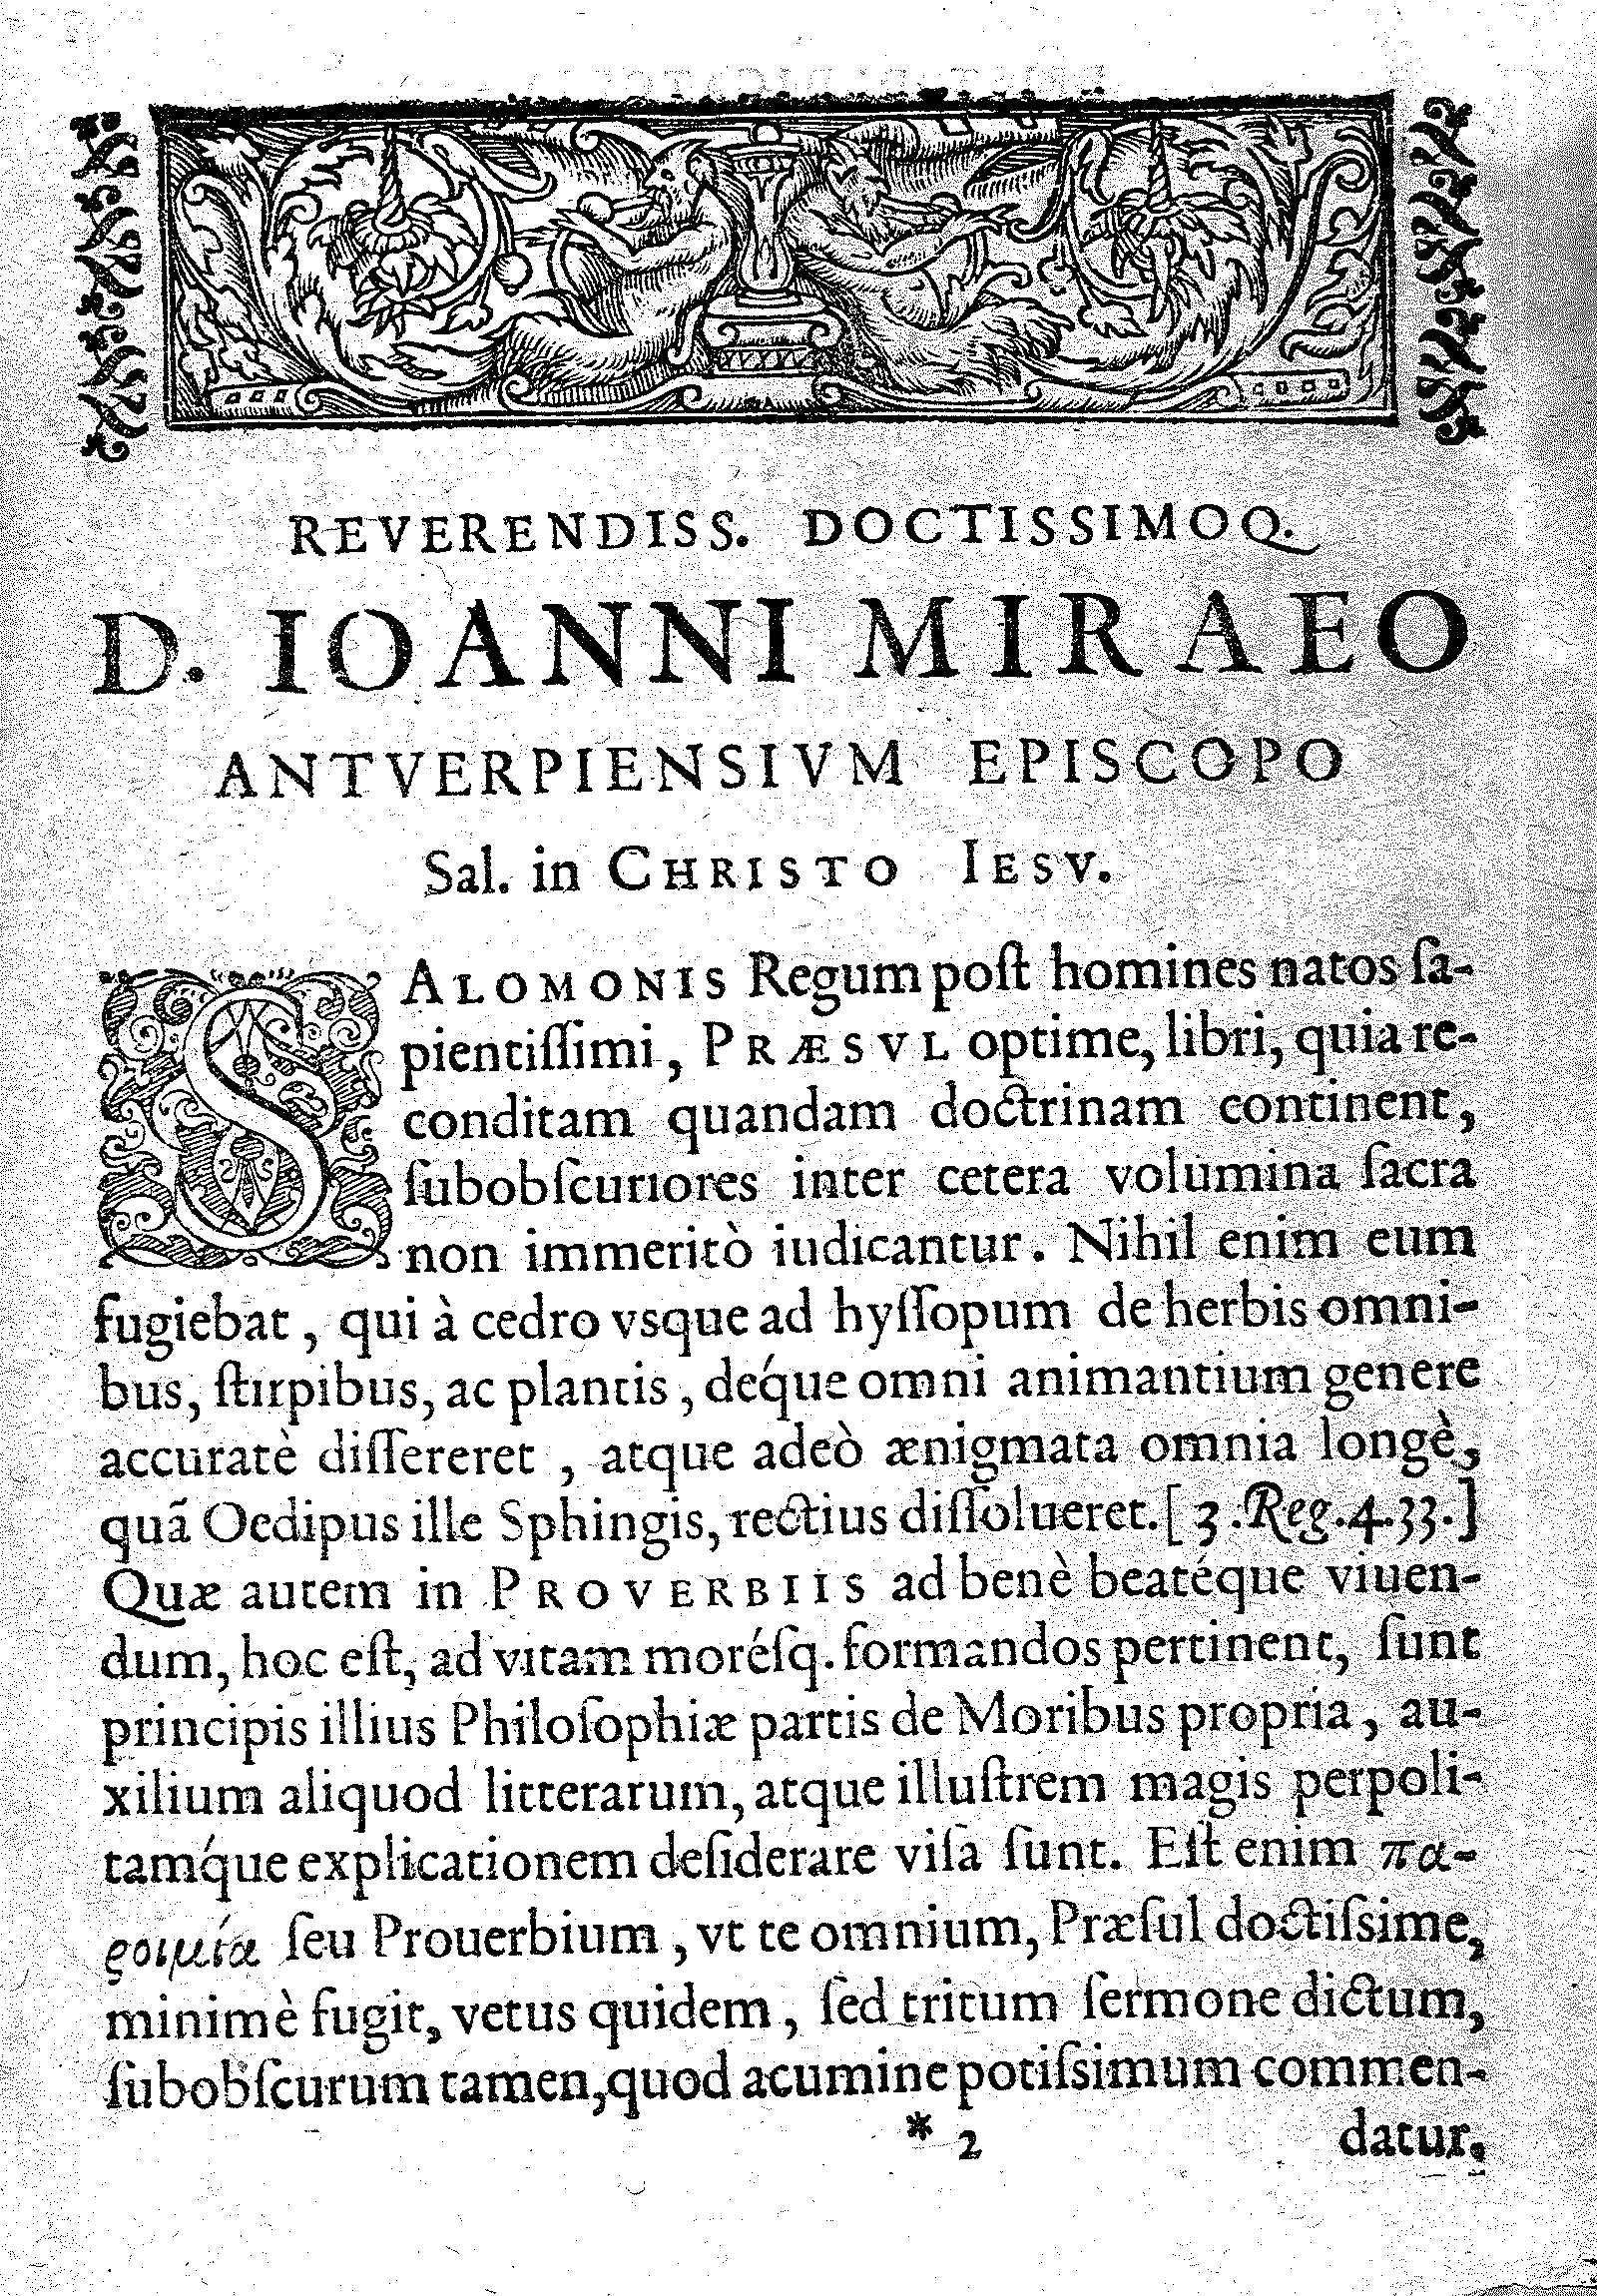 Reverendiss doctissimo D. Ioanni Miraeo antverpiensium episcopo